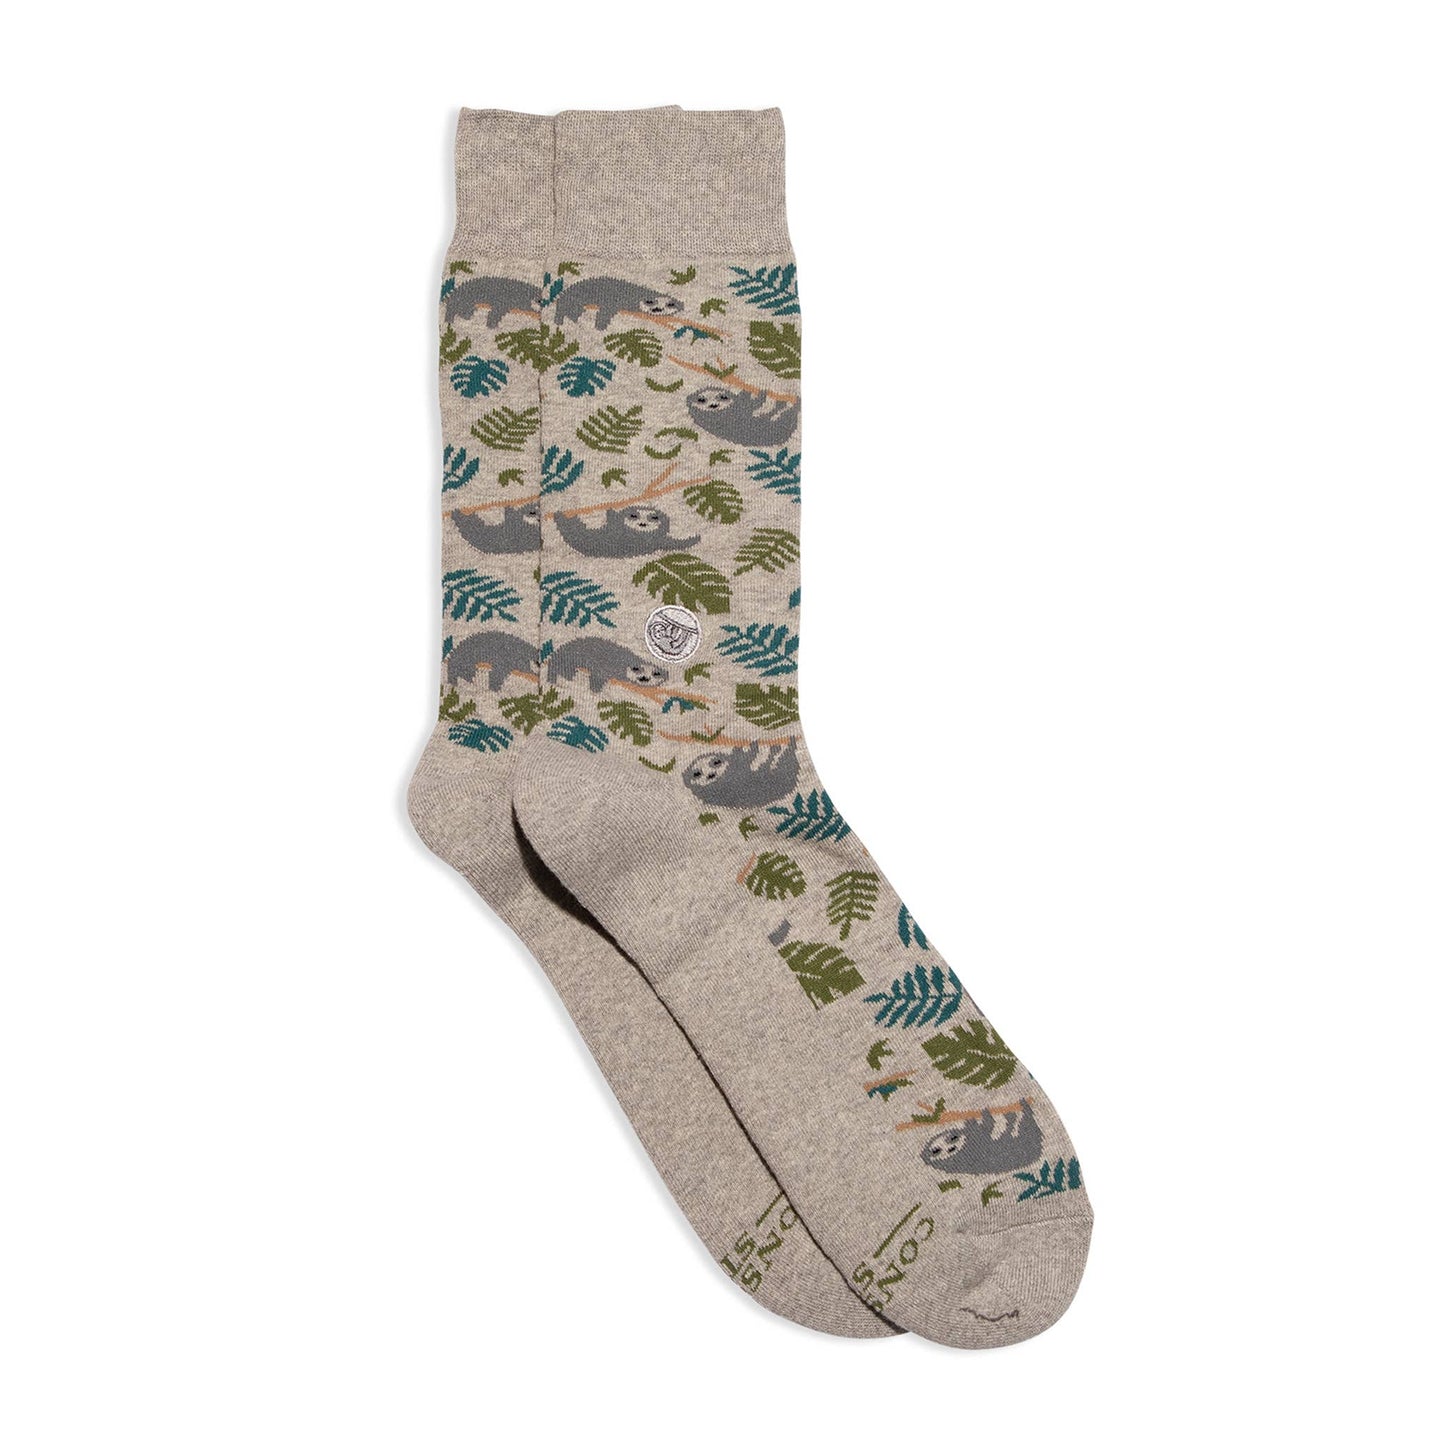 Socks that protect sloths flat lay